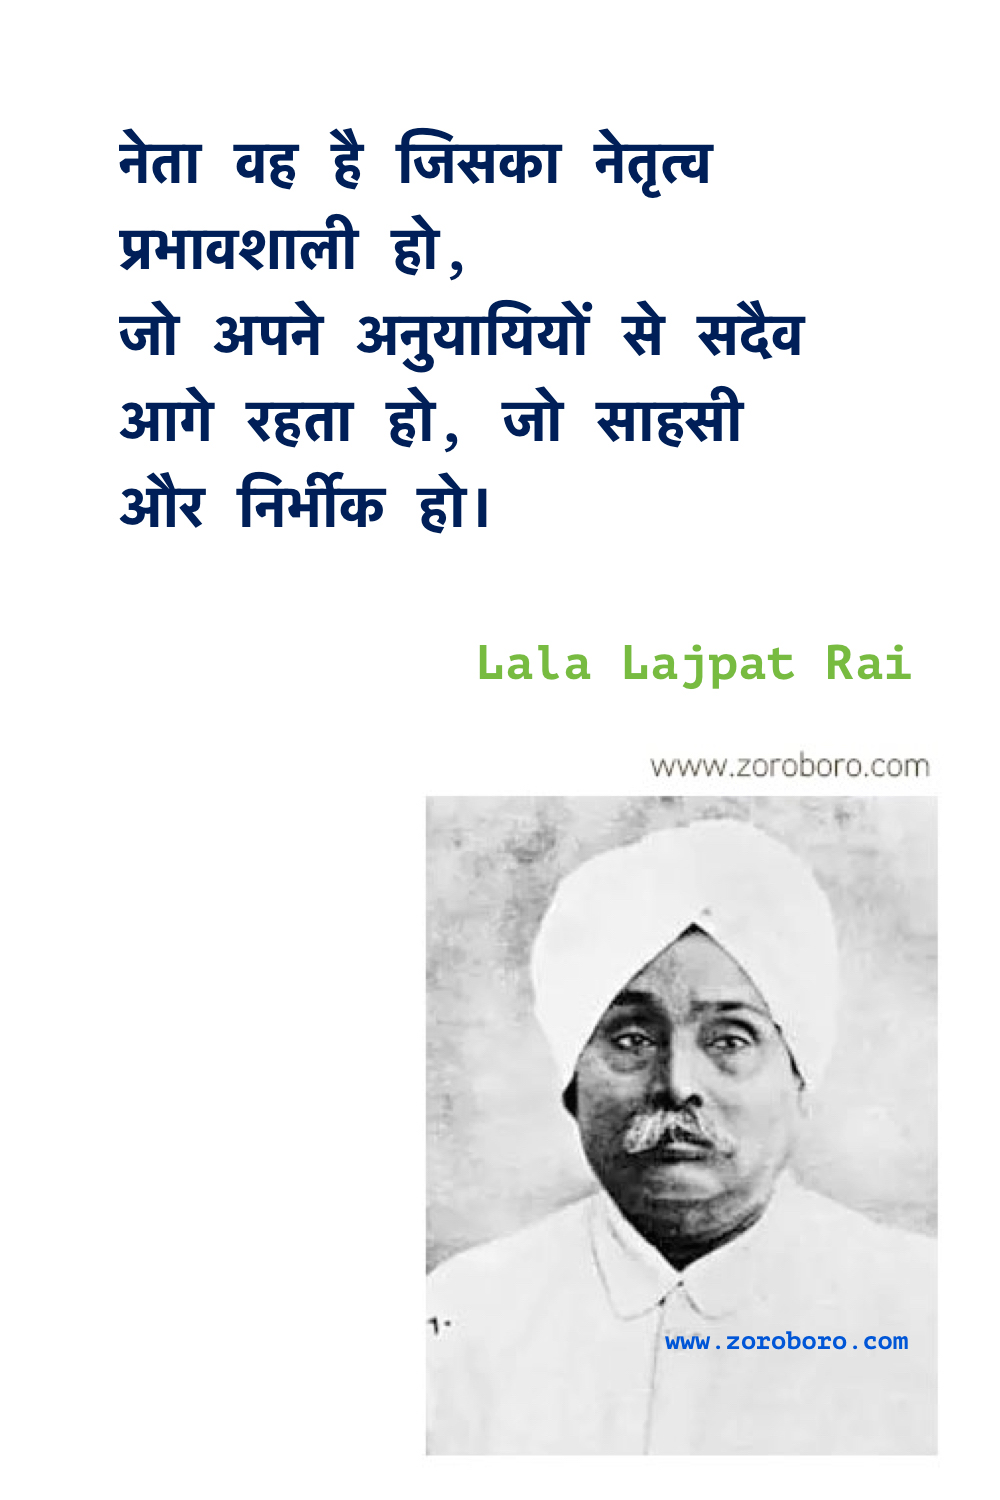 Lala Lajpat Rai Quotes, Lala Lajpat Rai Slogans Hindi, Lala Lajpat Rai Speech, Biography, Hindi Quotes and English / Freedom Fighter